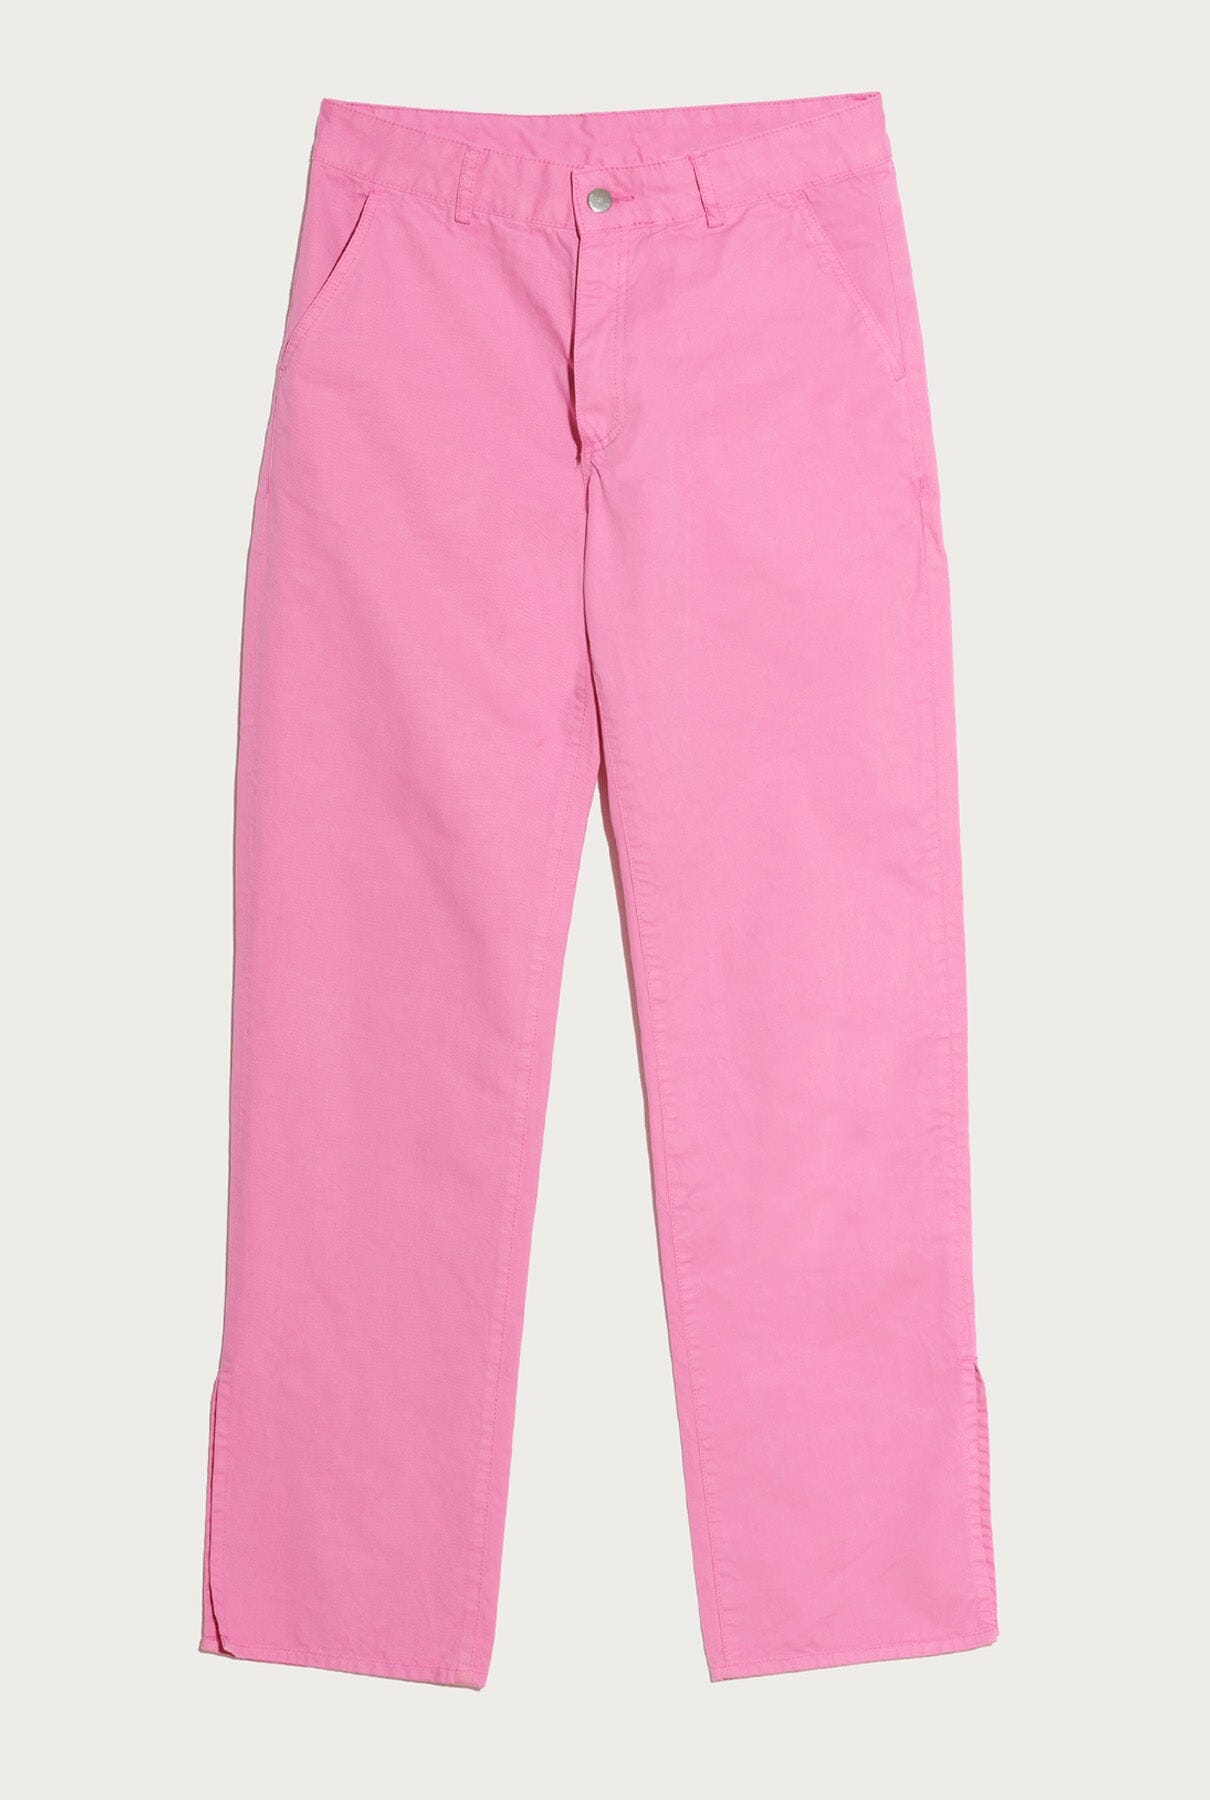 Pink Pants Trousers Ynes Suelves 